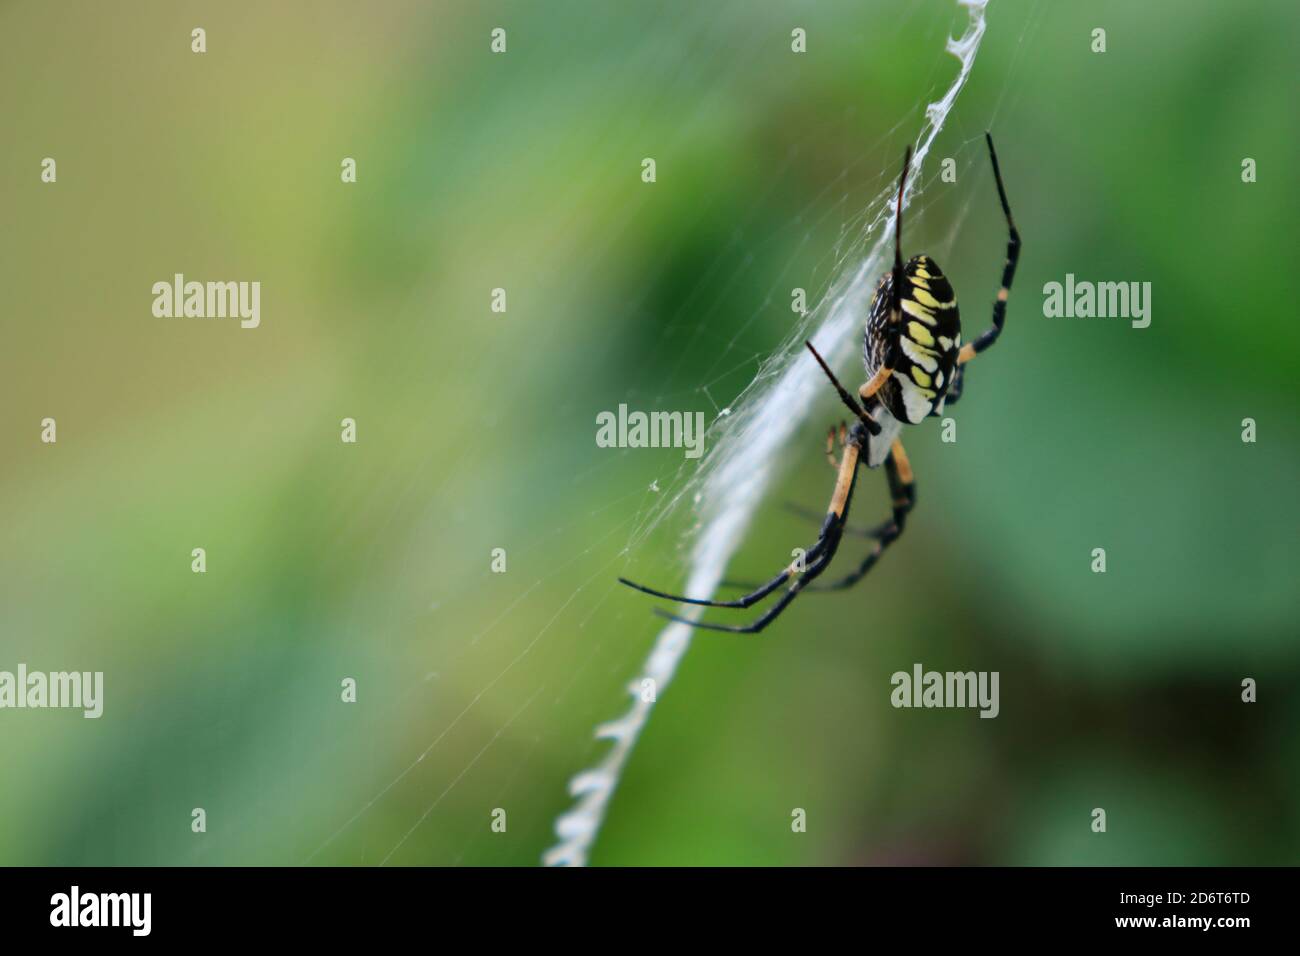 Golden garden weaver spider (Argiope aurantia) on web Stock Photo